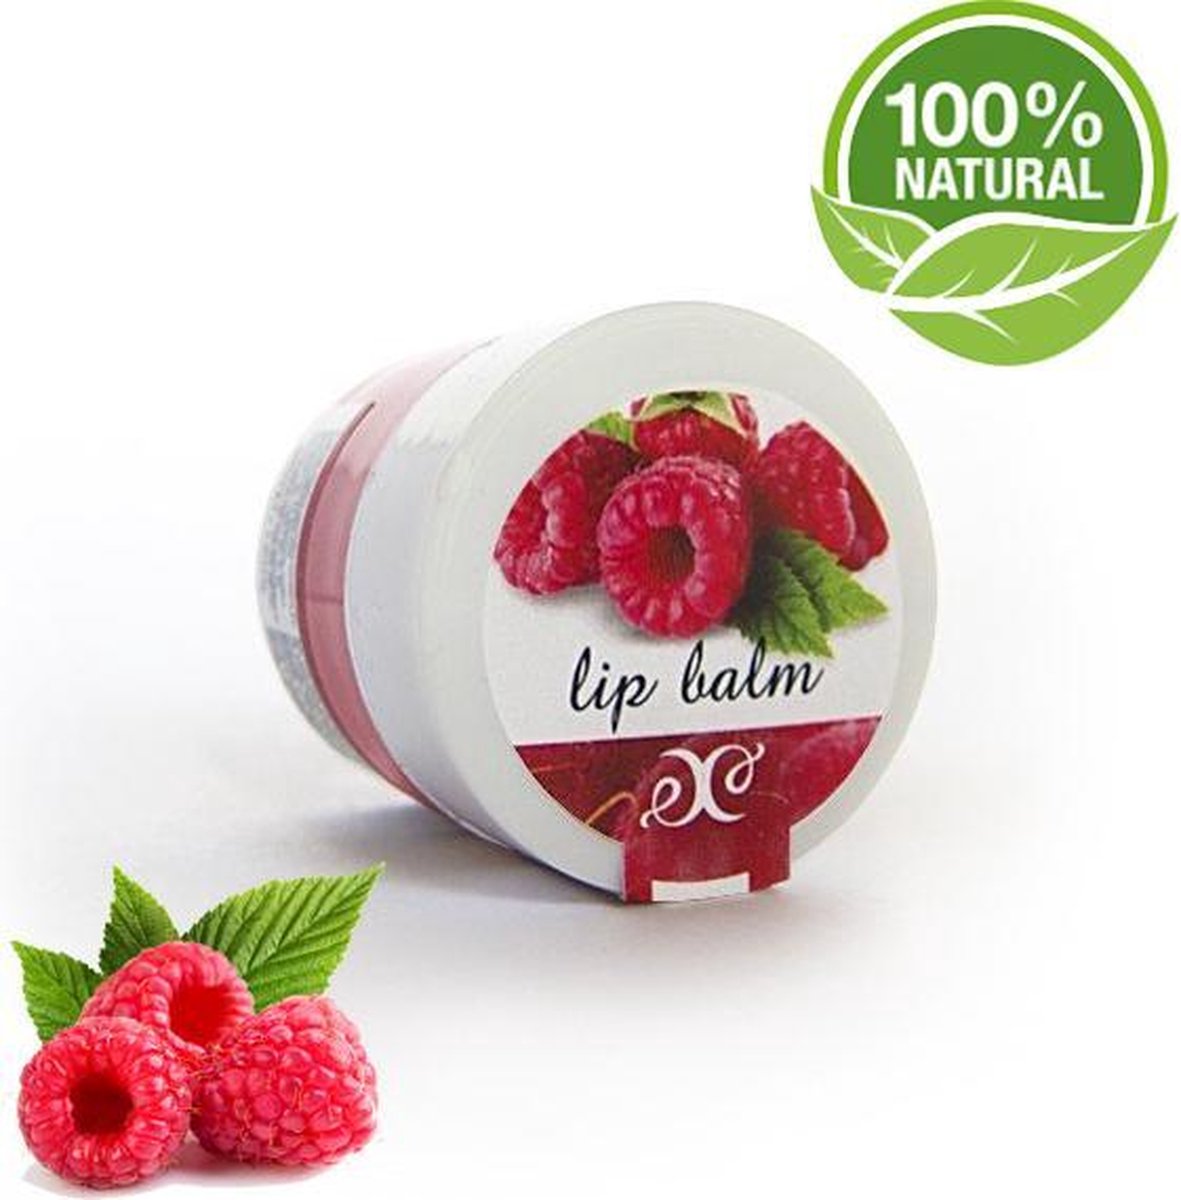 Lippen Balsem Framboos 100% Natural - Hydrateert, Voedt & Verzorgt - 30ml